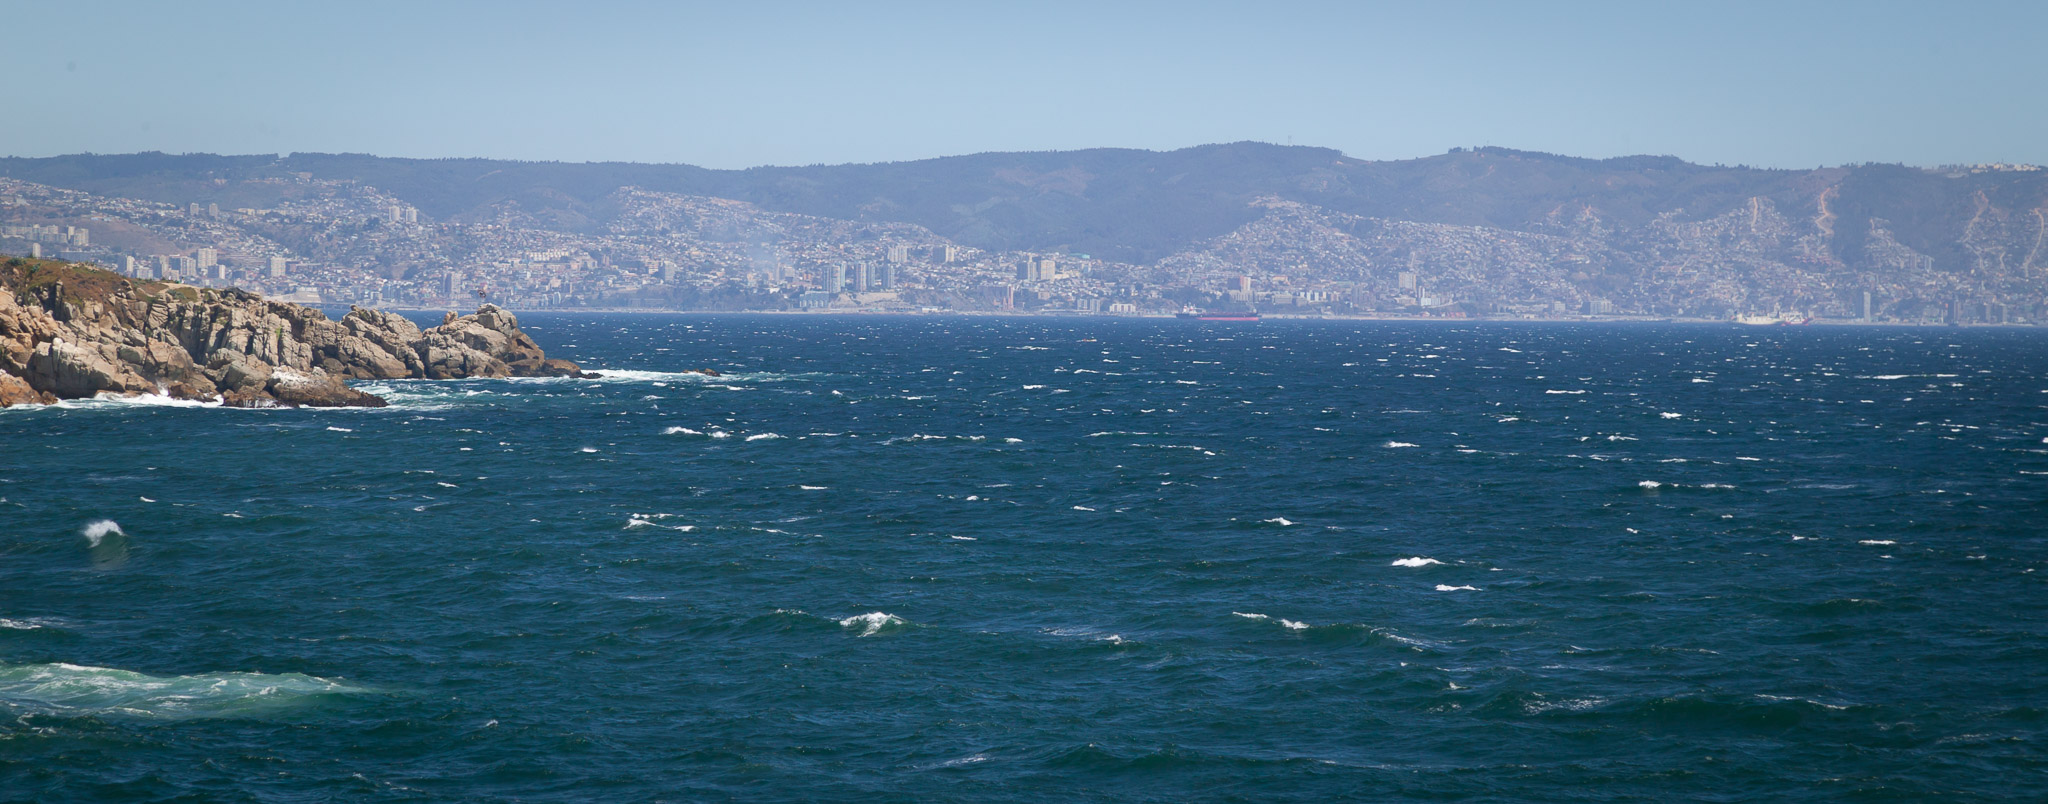 Valparaiso in distance, from Vina del Mar